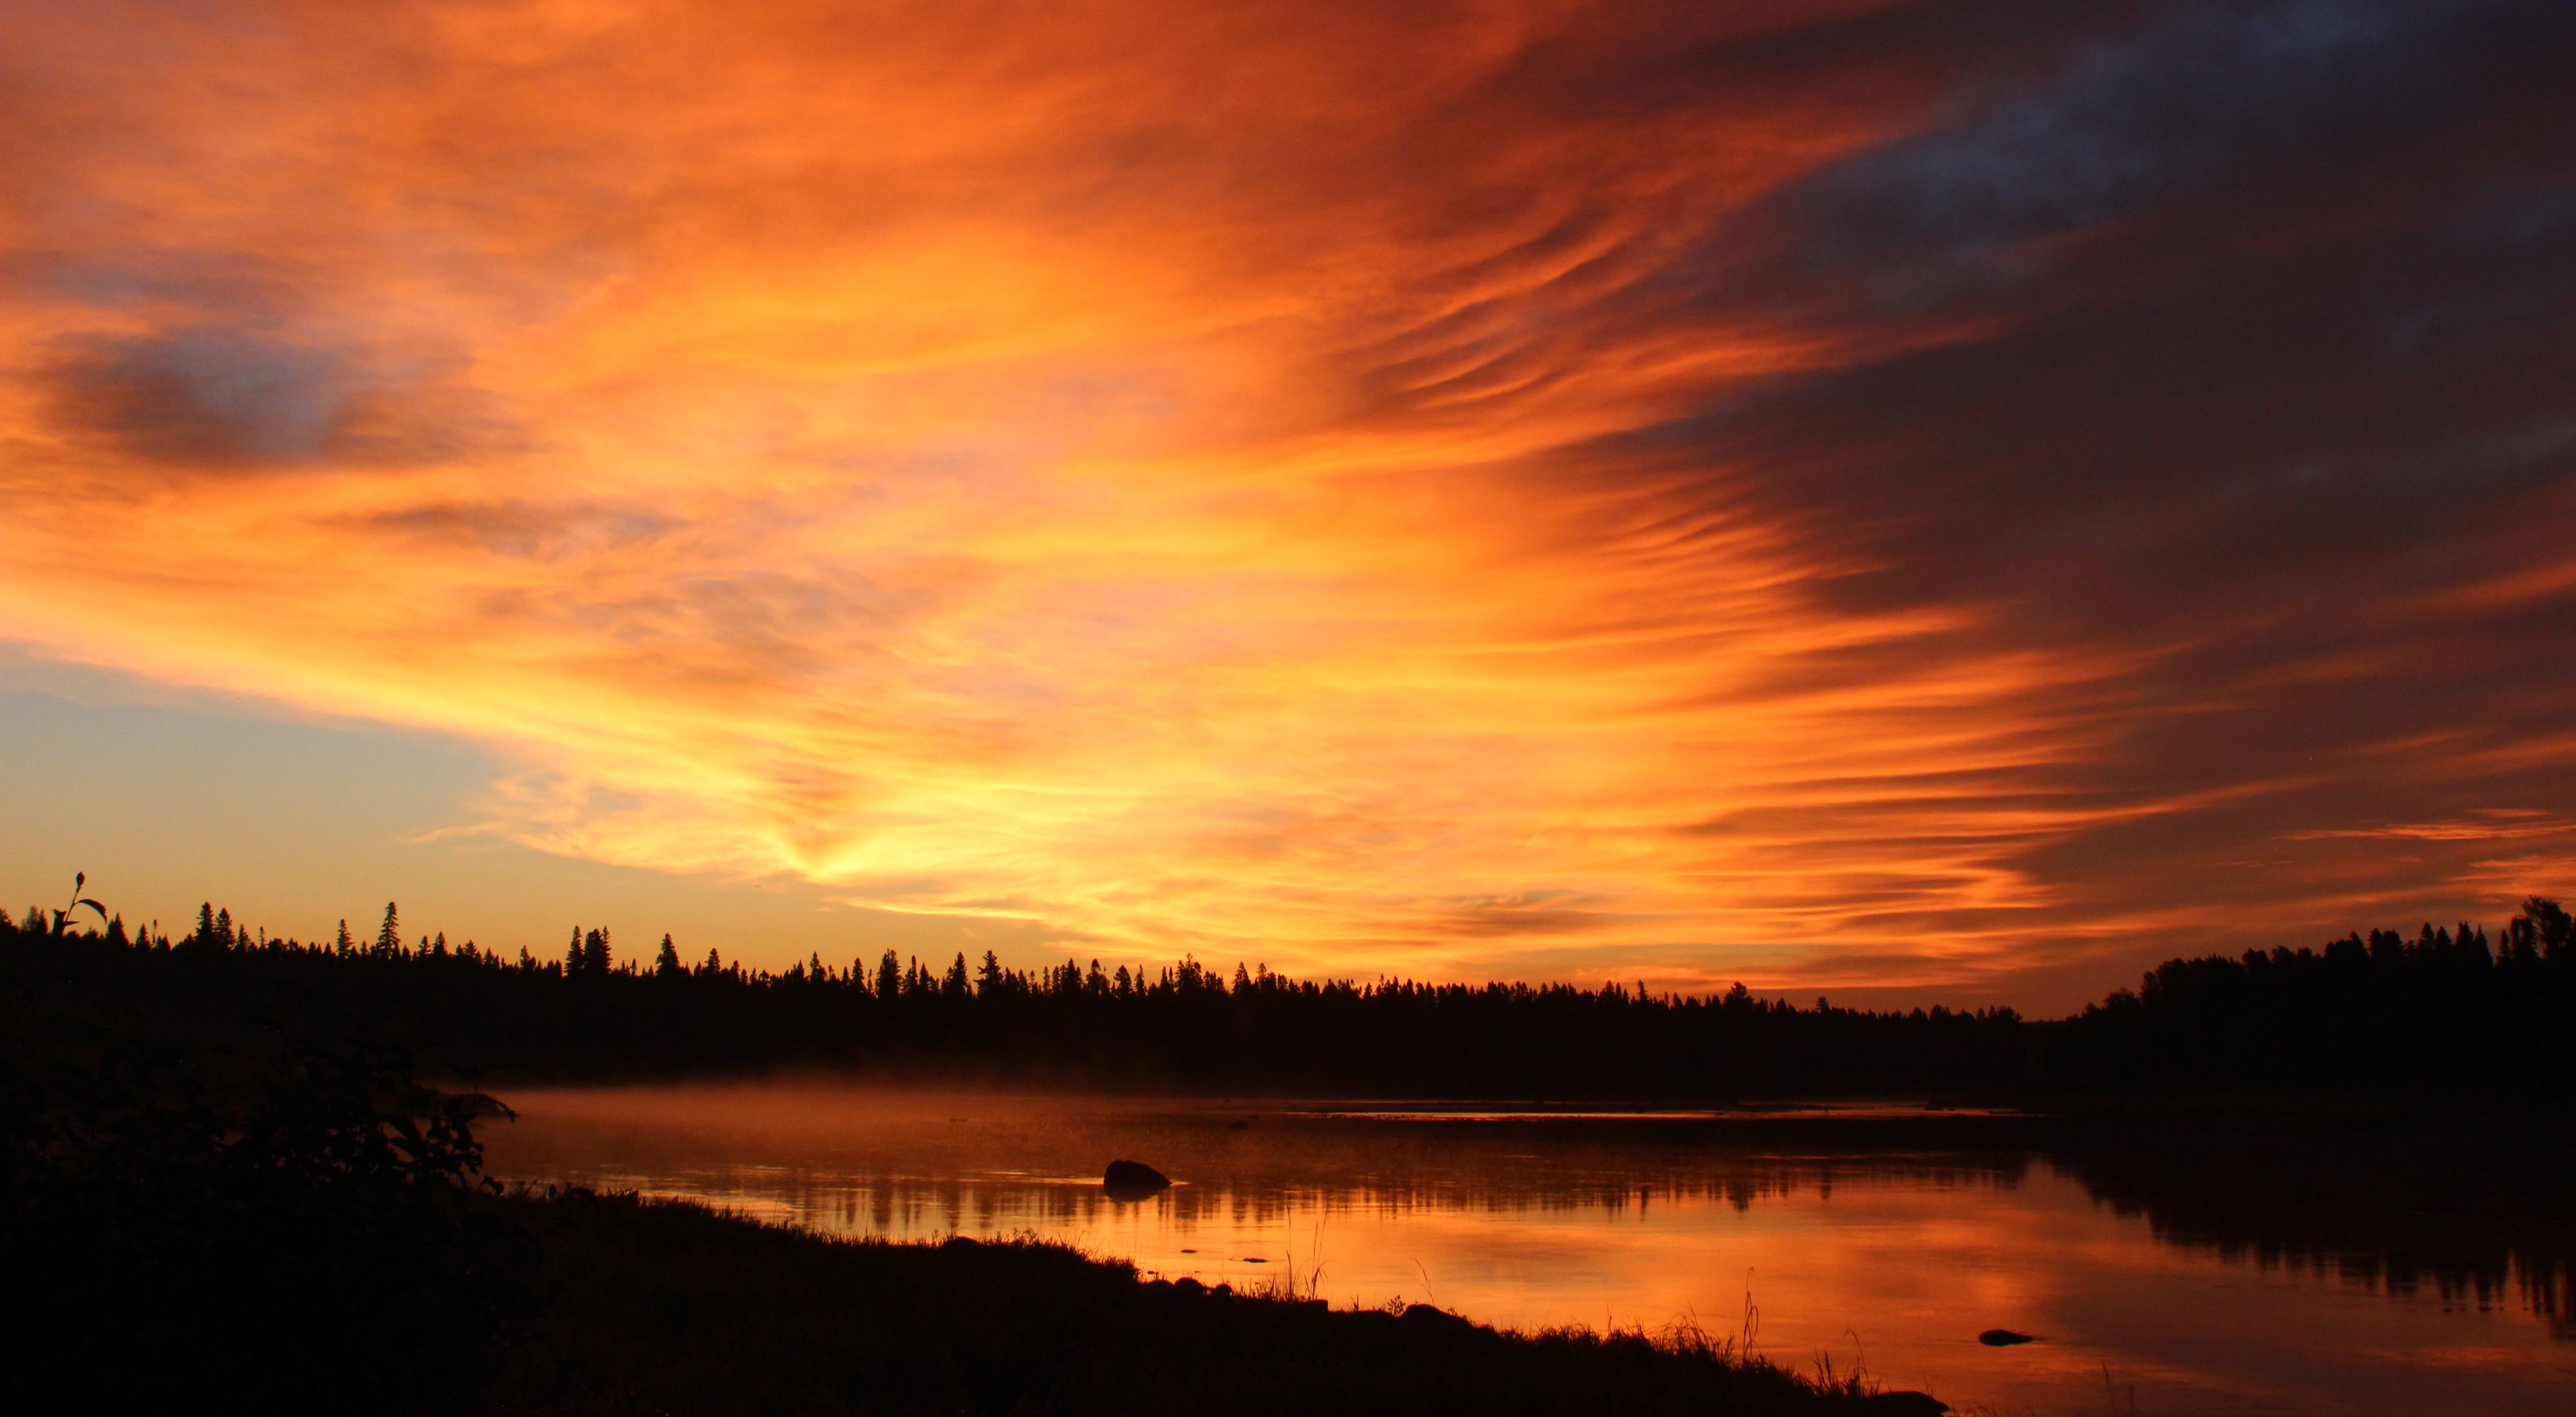 A brilliant orange sunrise over the St. John River.